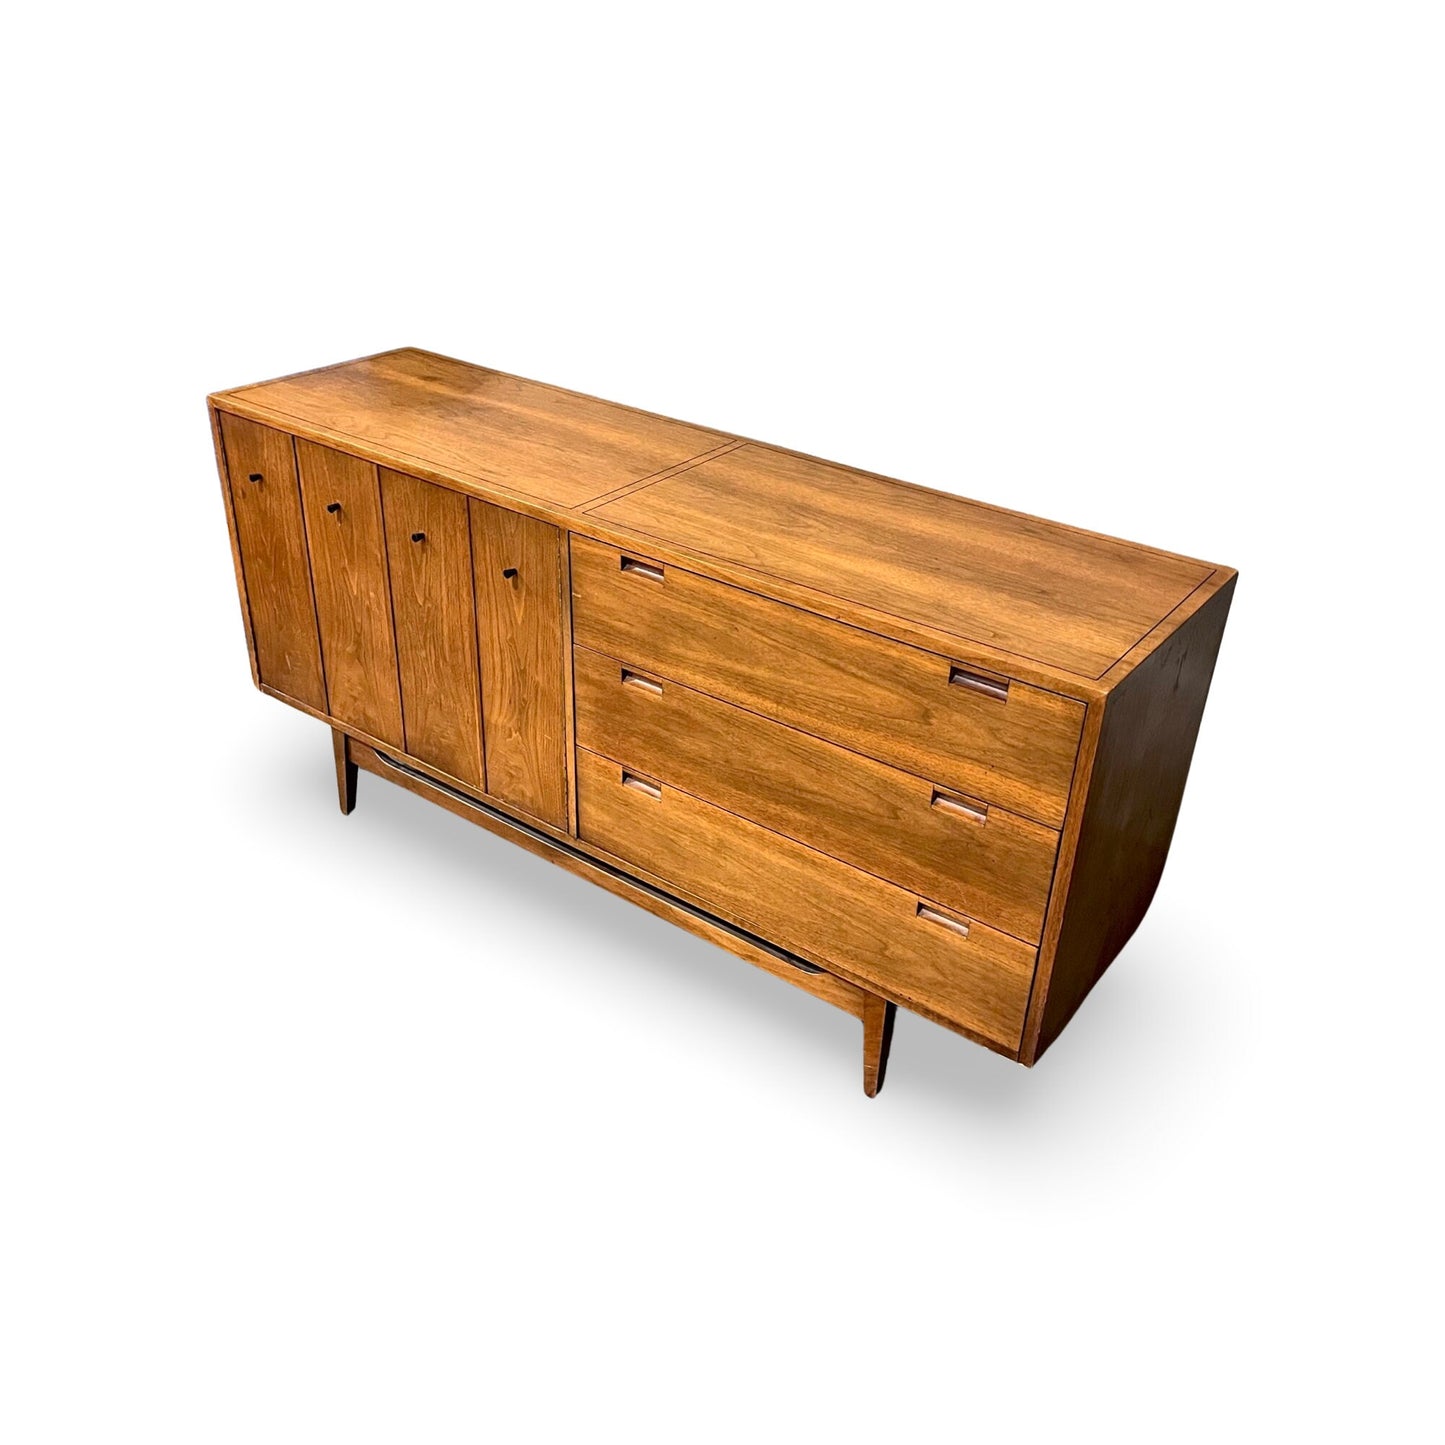 Elegant walnut dresser with contrasting vertical and horizontal graining.